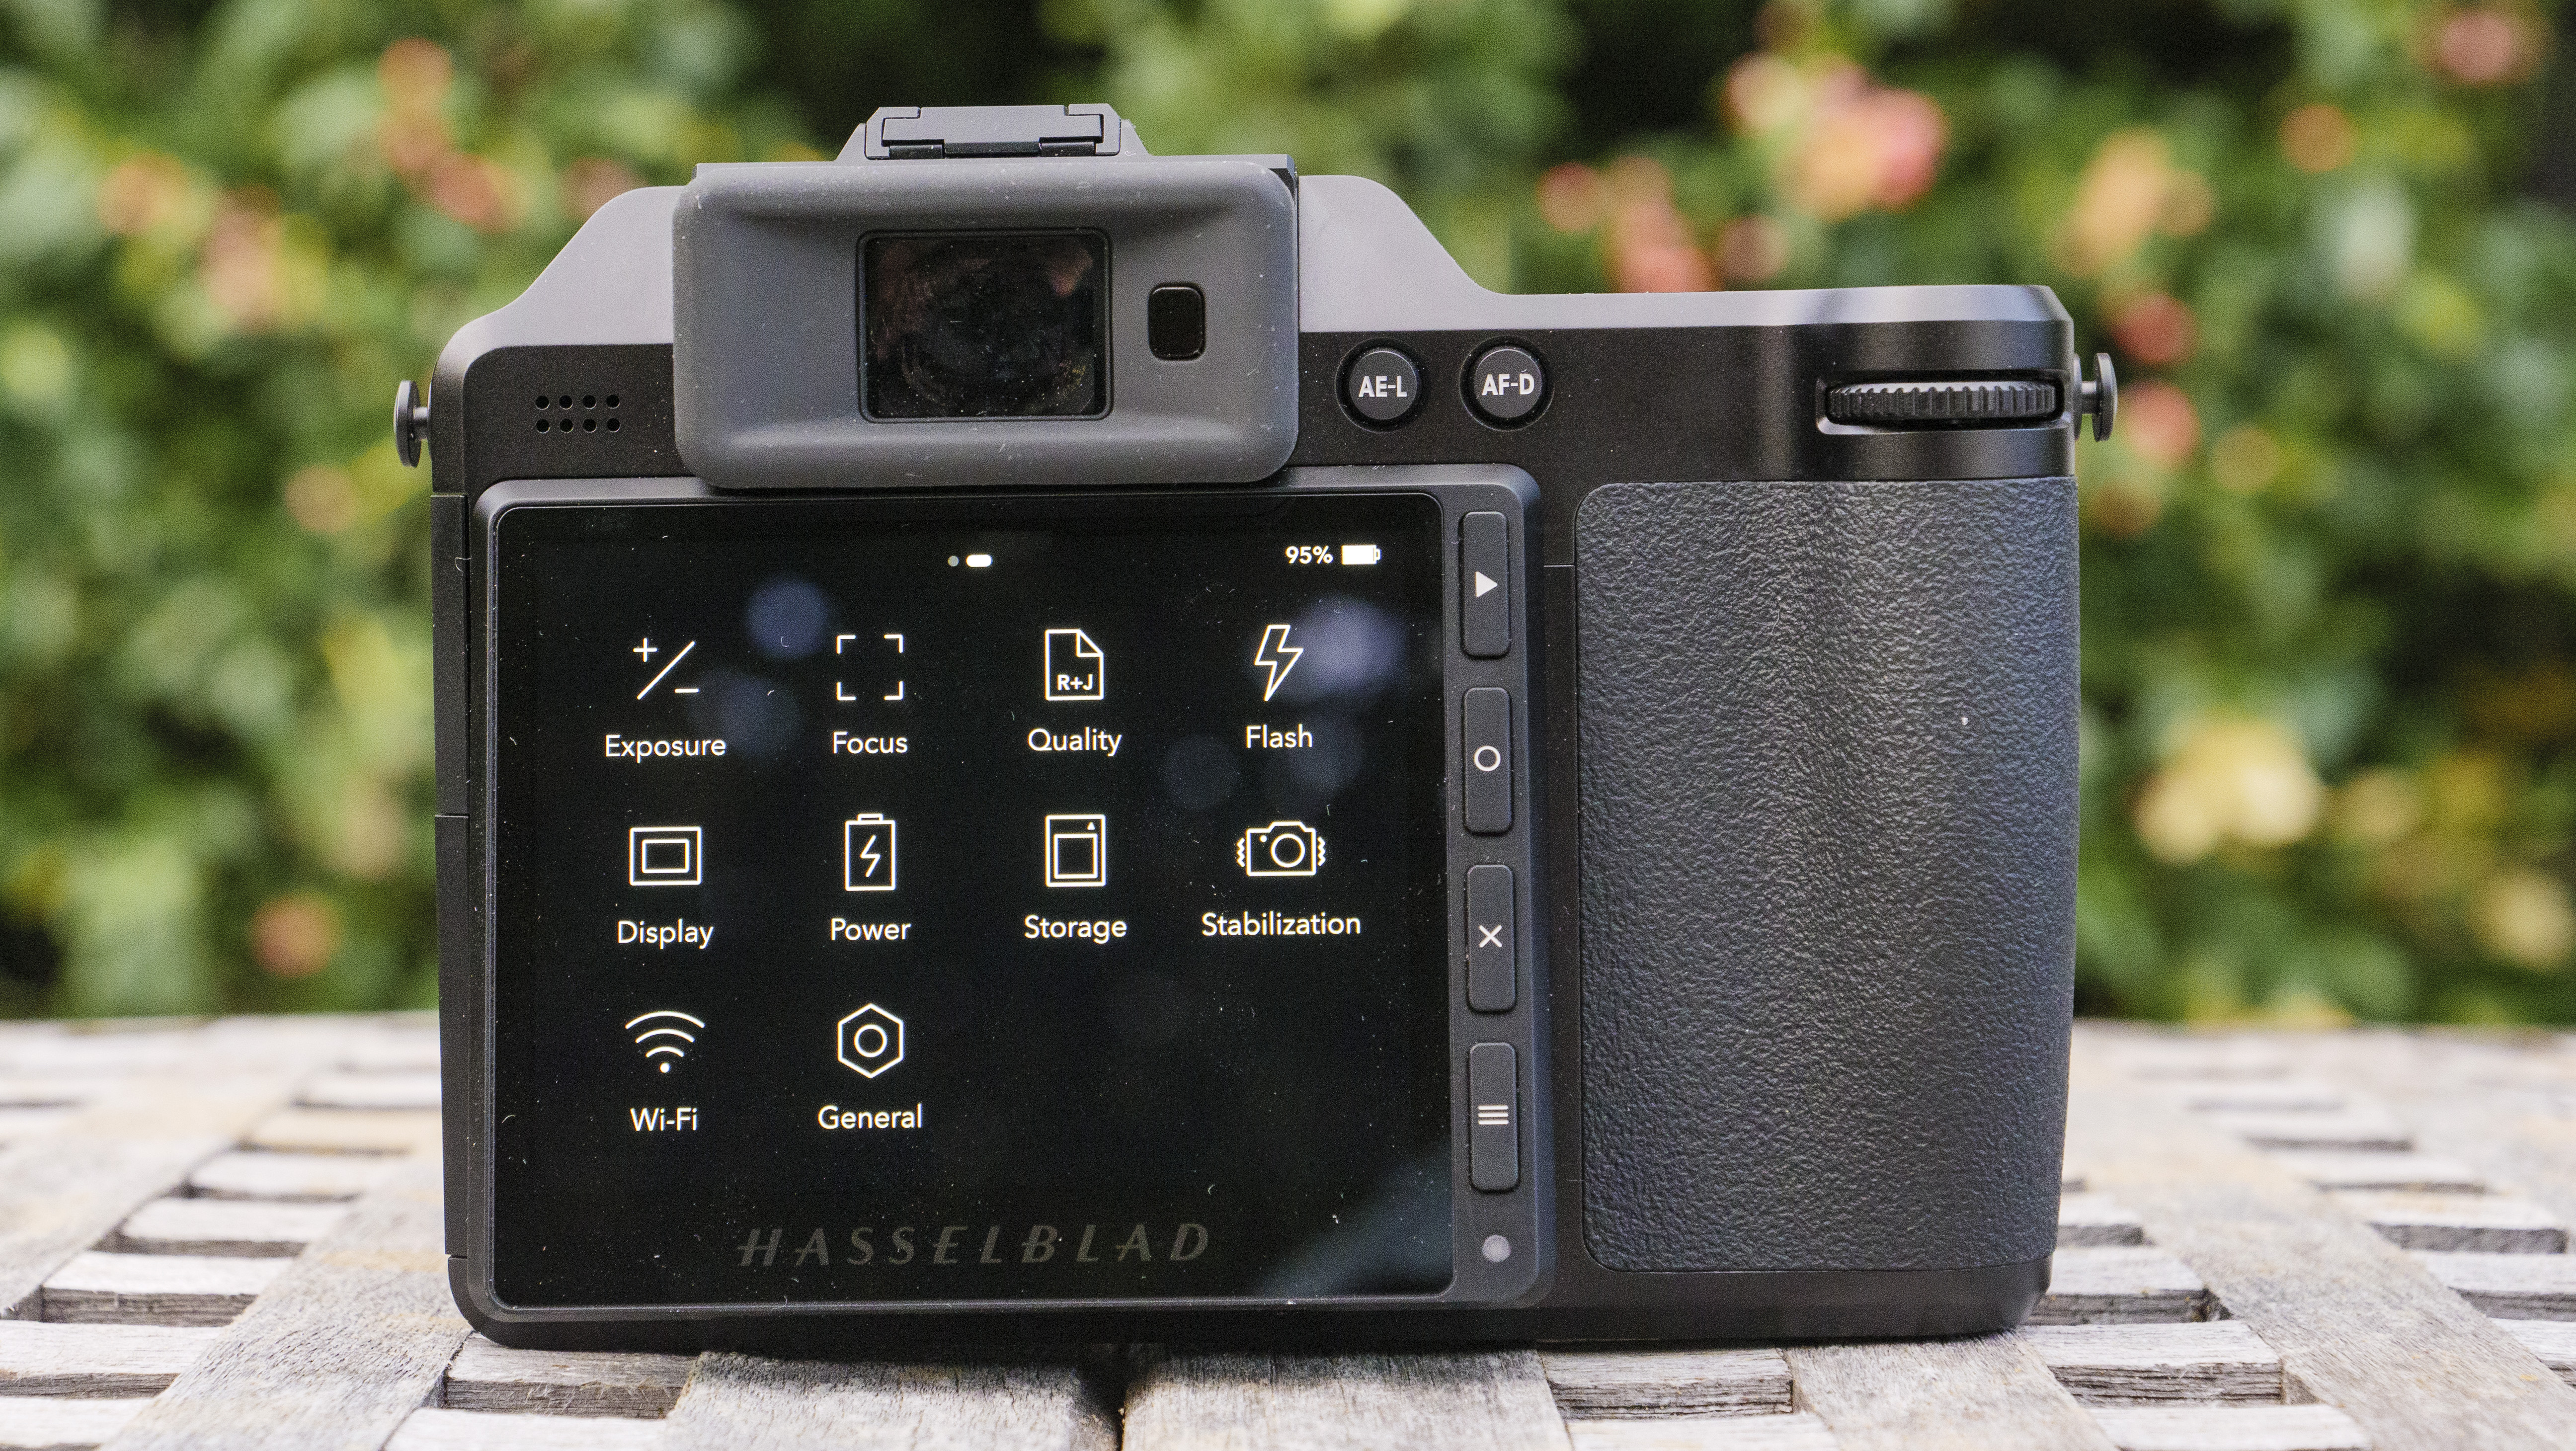 The Hasselblad X2D 100C camera's main menu